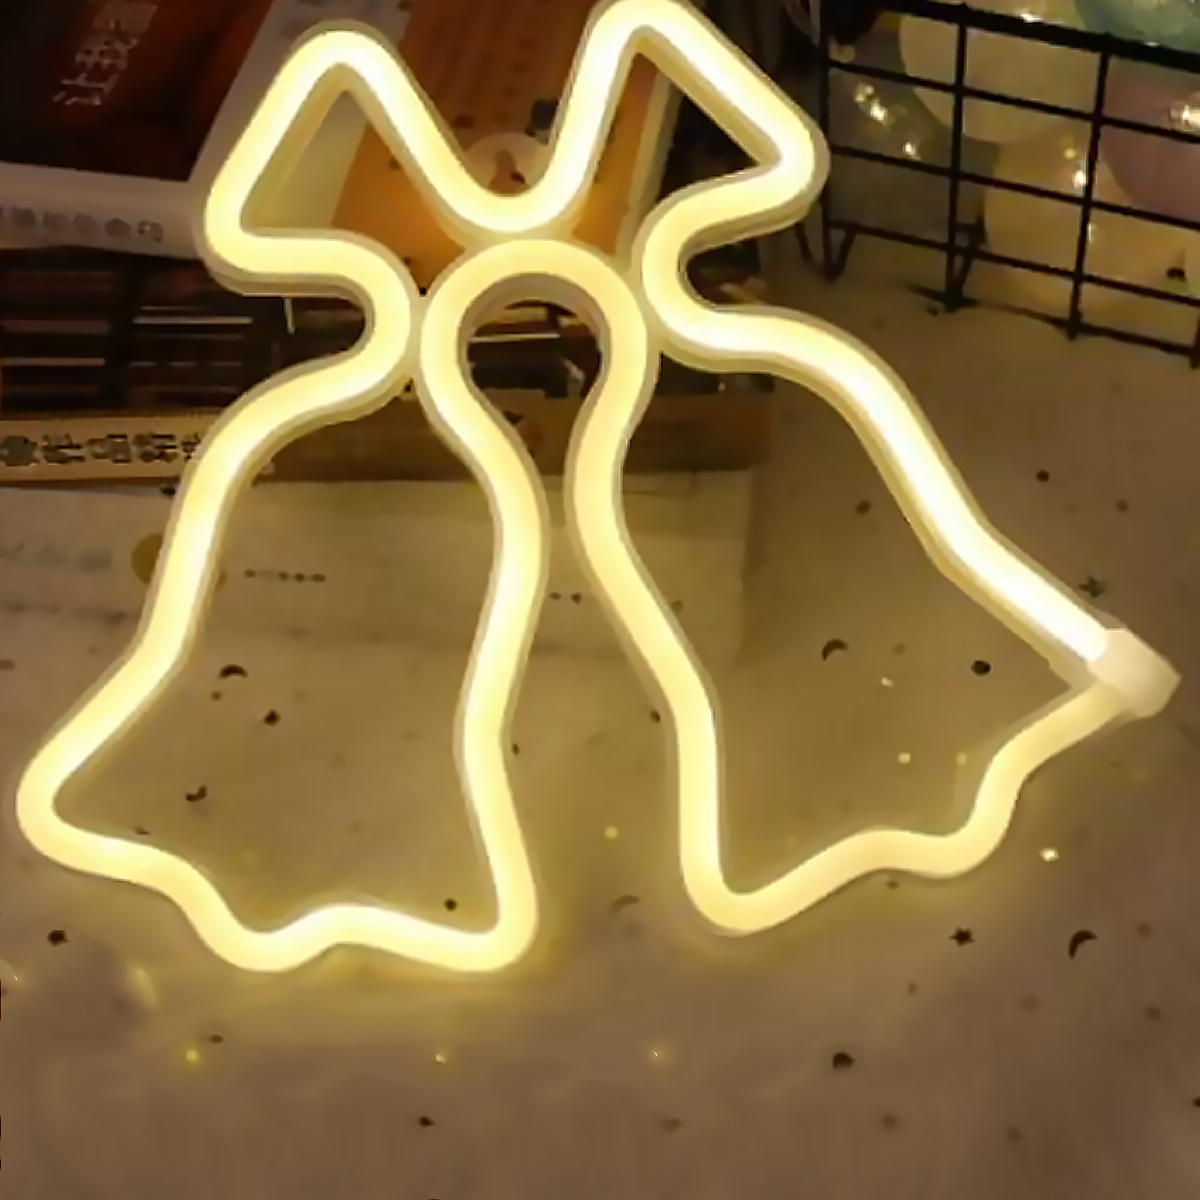 BatteryUSB-Neon-Light-Sign-LED-Lamp-Shaped-Night-Light-Art-Wall-Warm-Party-Christmas-Decoration-1800988-8